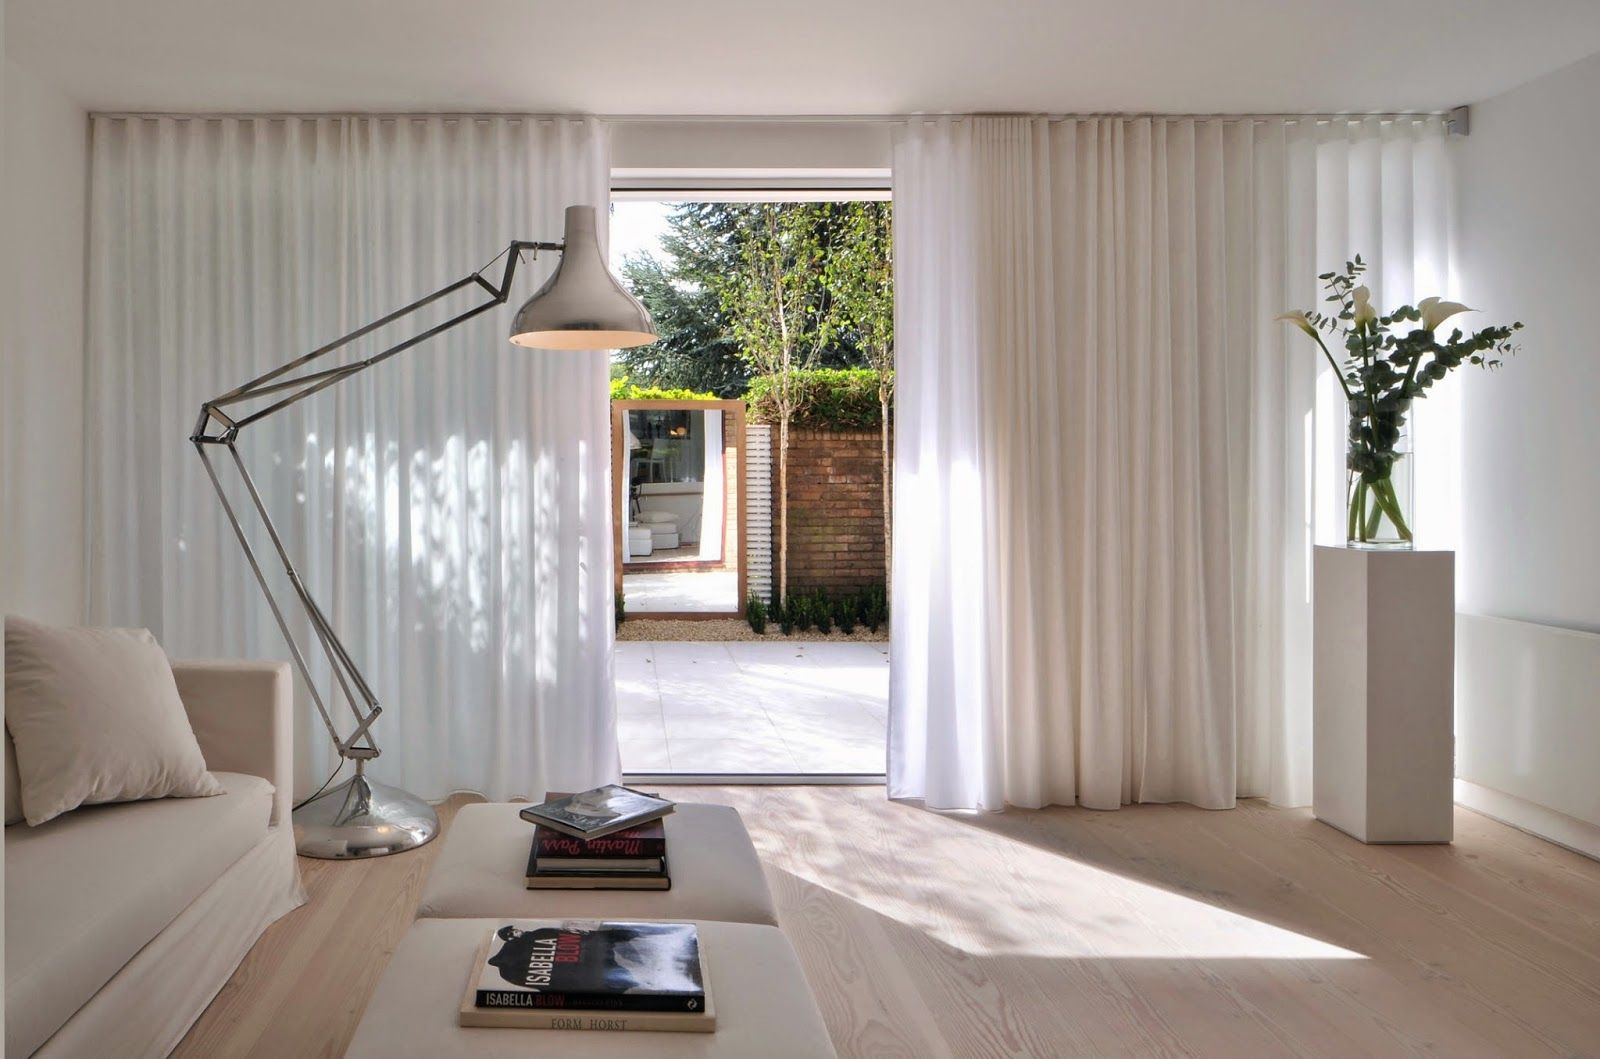 gardiner i stuen minimalisme